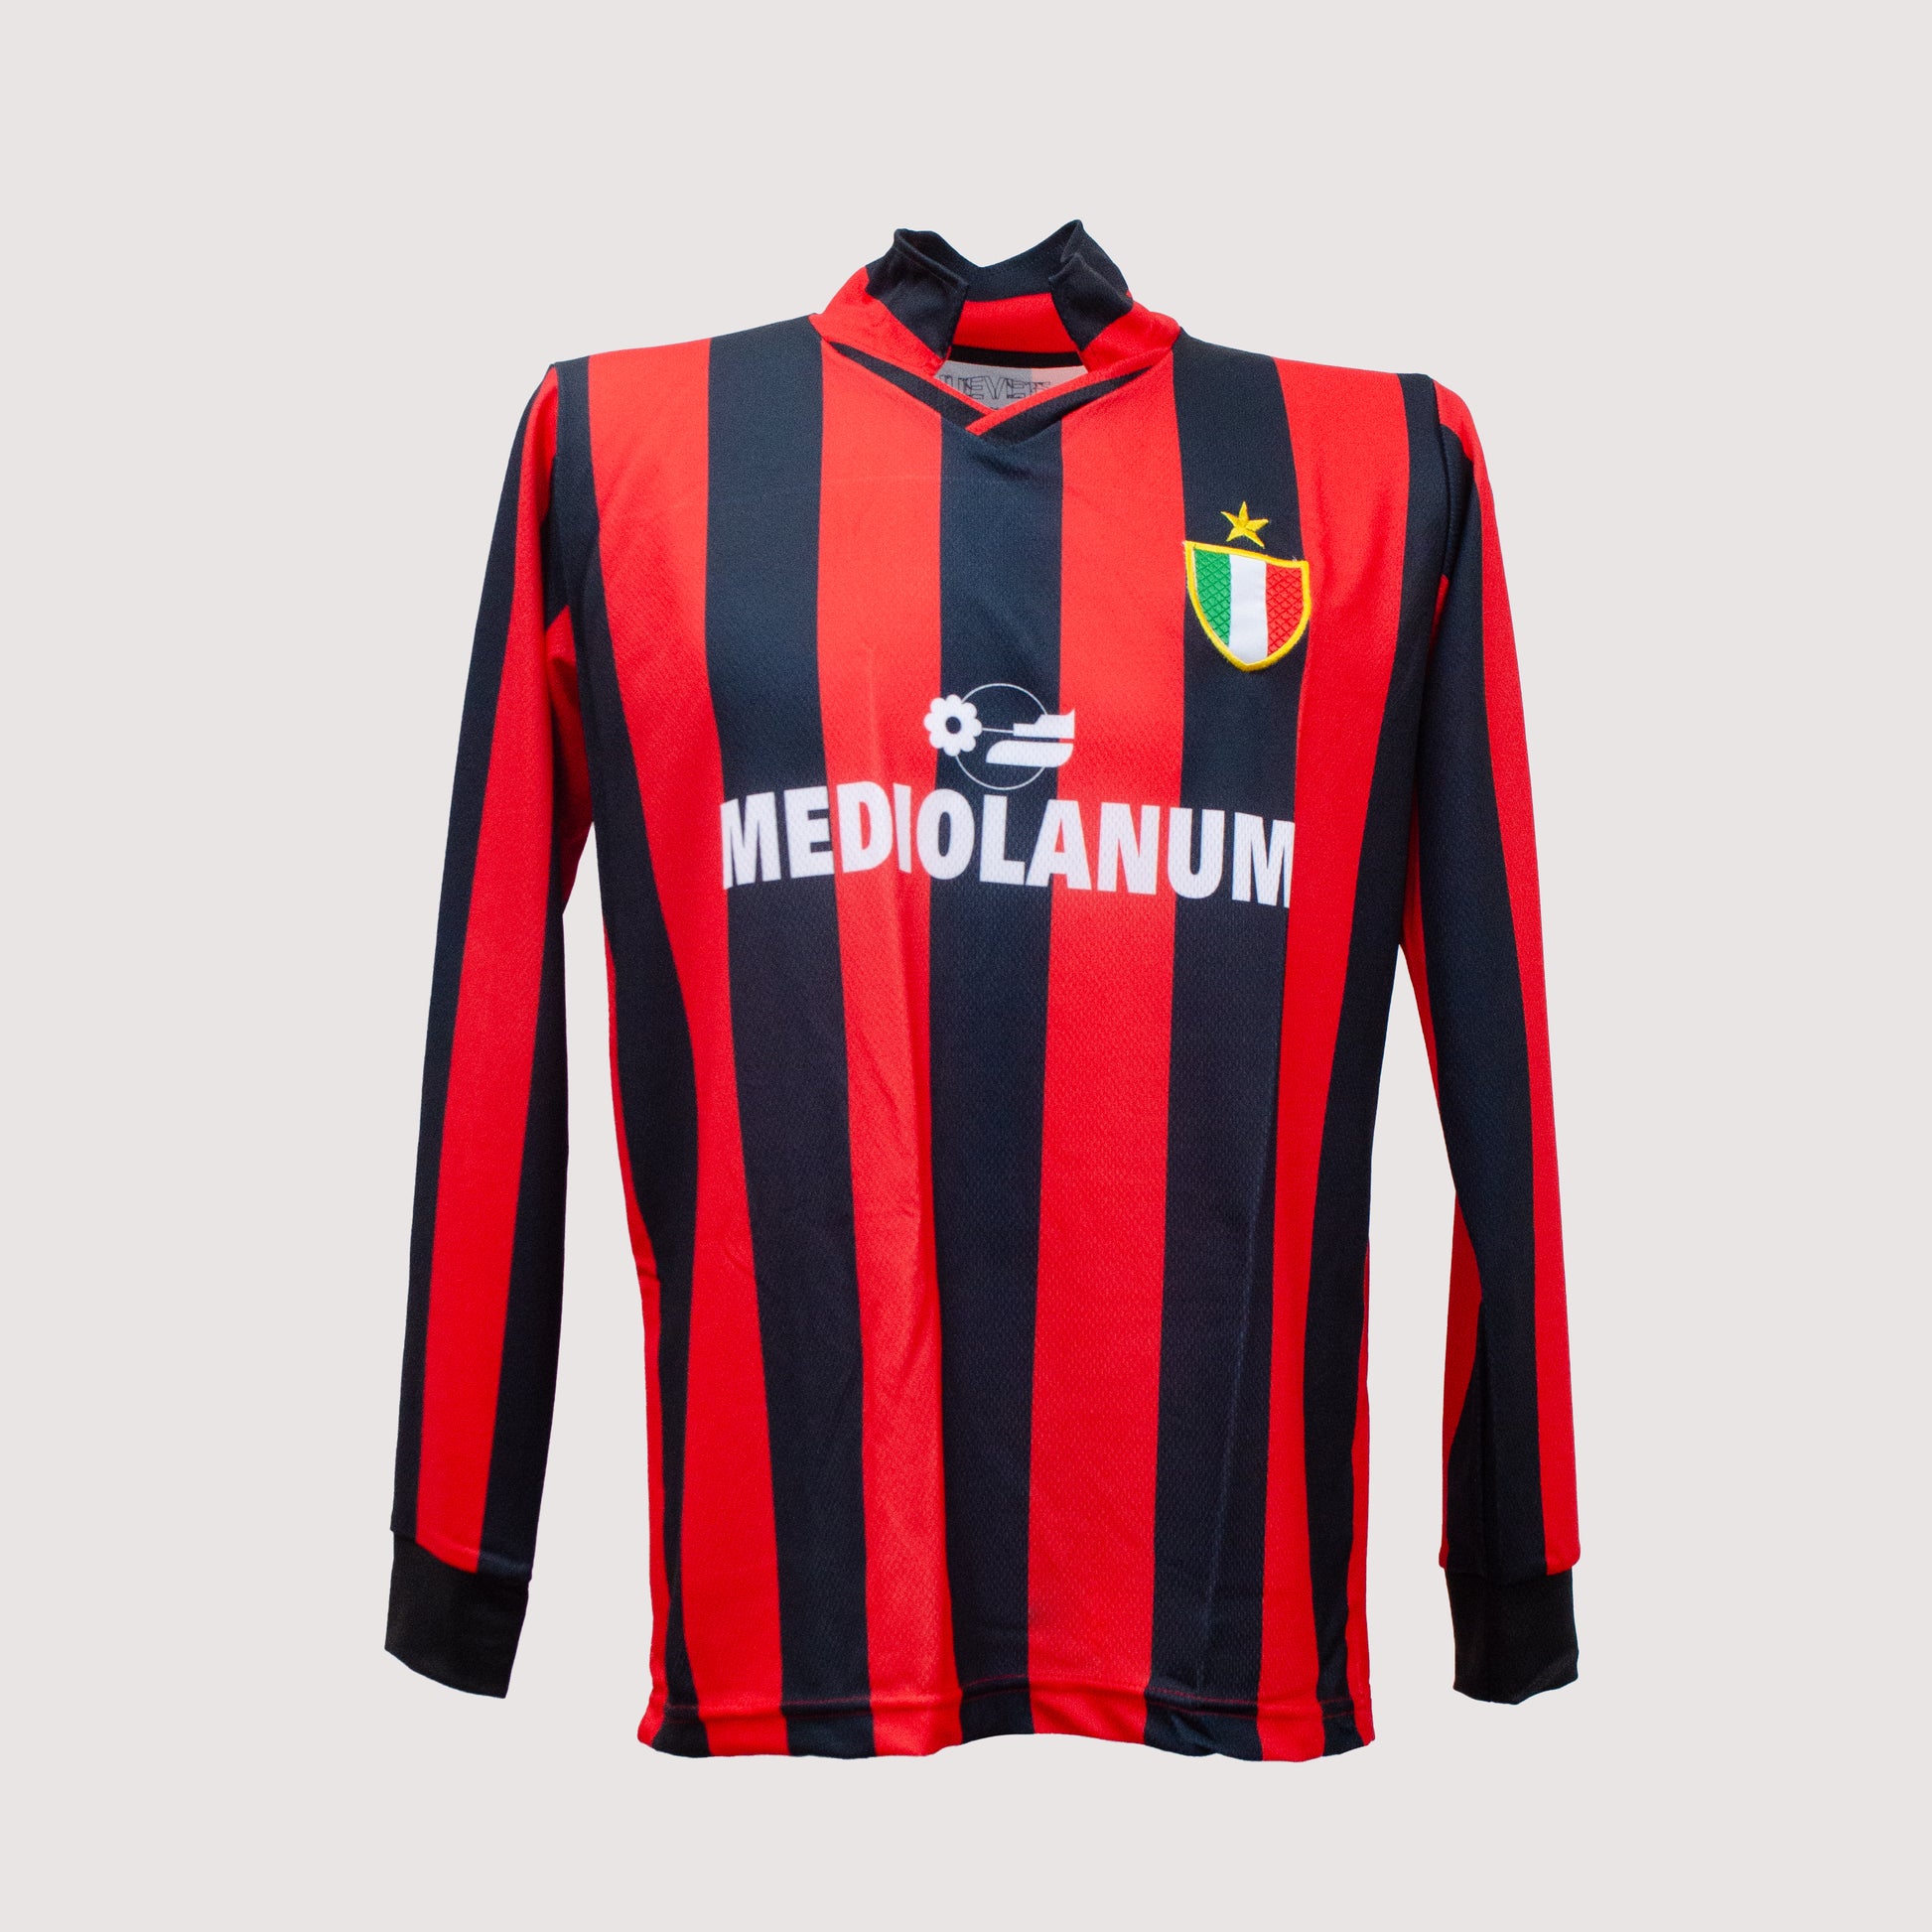 Camisetas para haxball - CAMISETA DEL MILAN, /colors red 0 FFFFFF E00404  000000 E80000